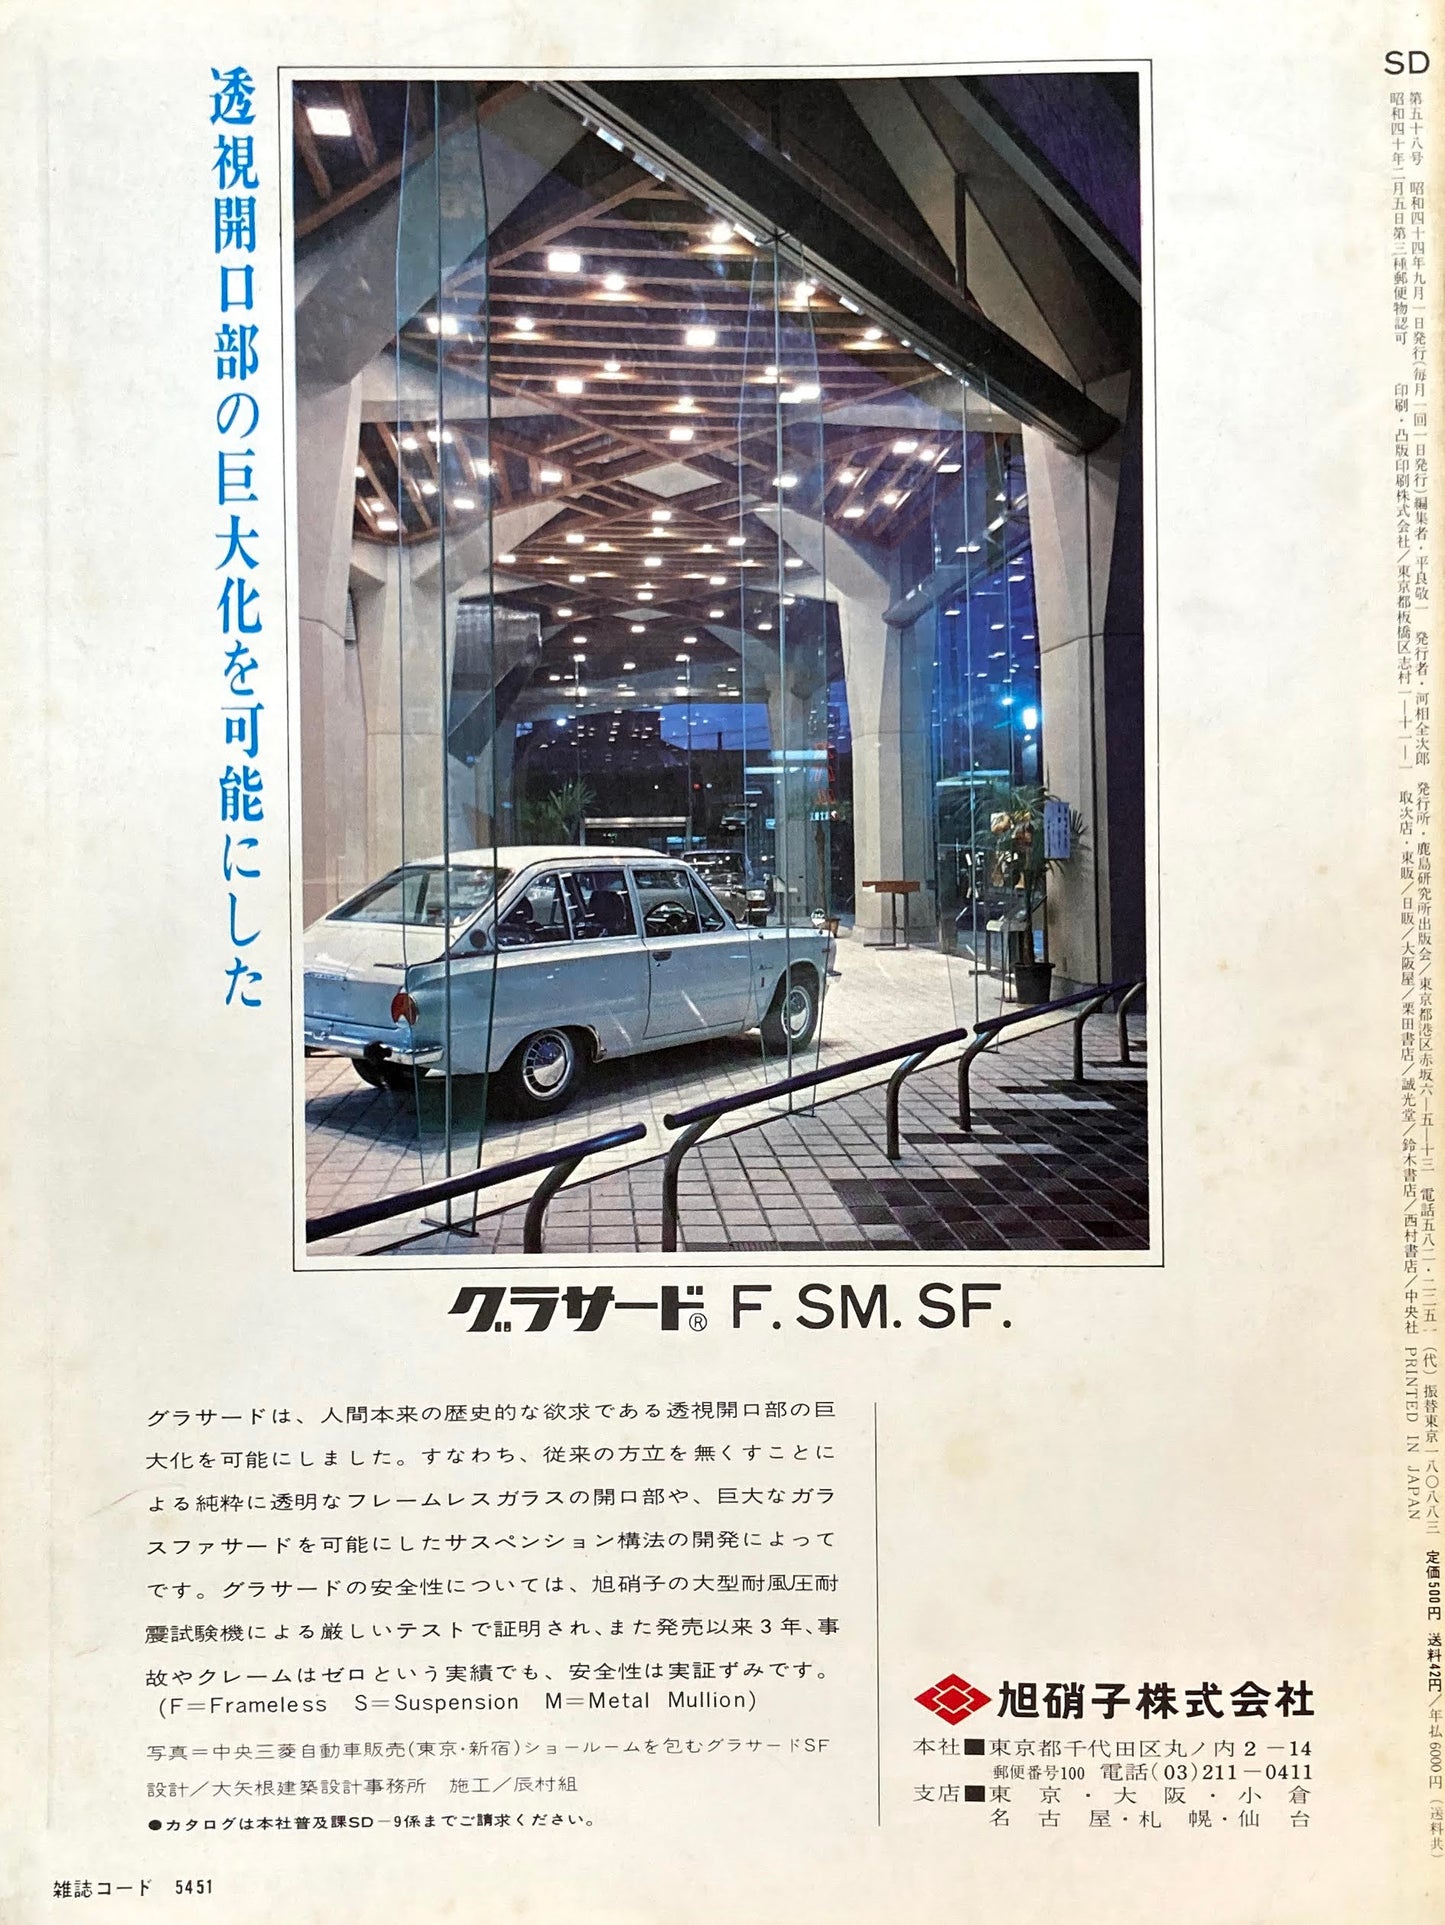 SD　スペースデザイン　1969年9月号　NO.58　高密度都市空間のイメージ　